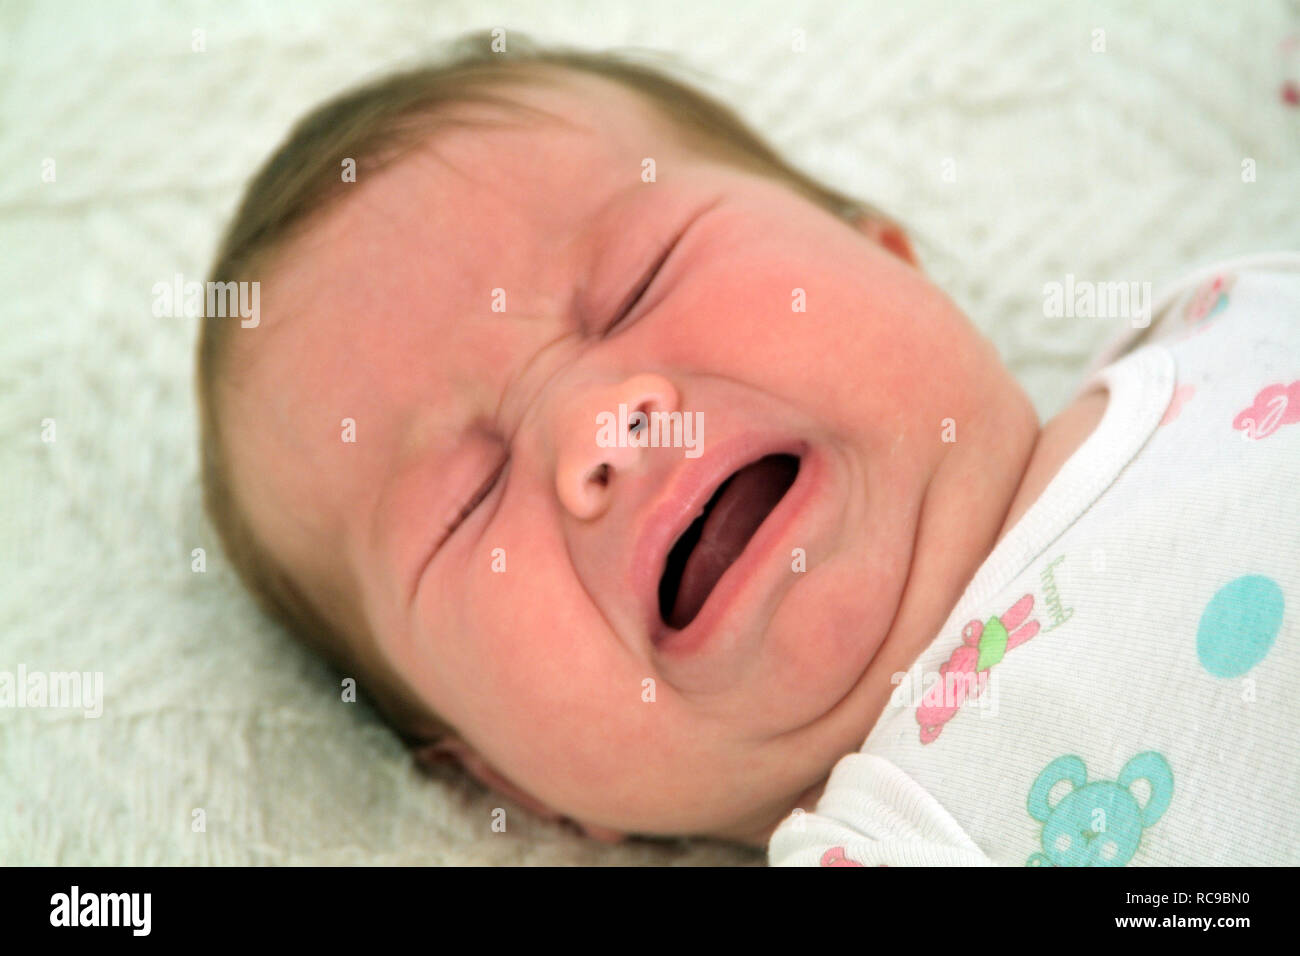 Baby schreit | baby crying Stock Photo